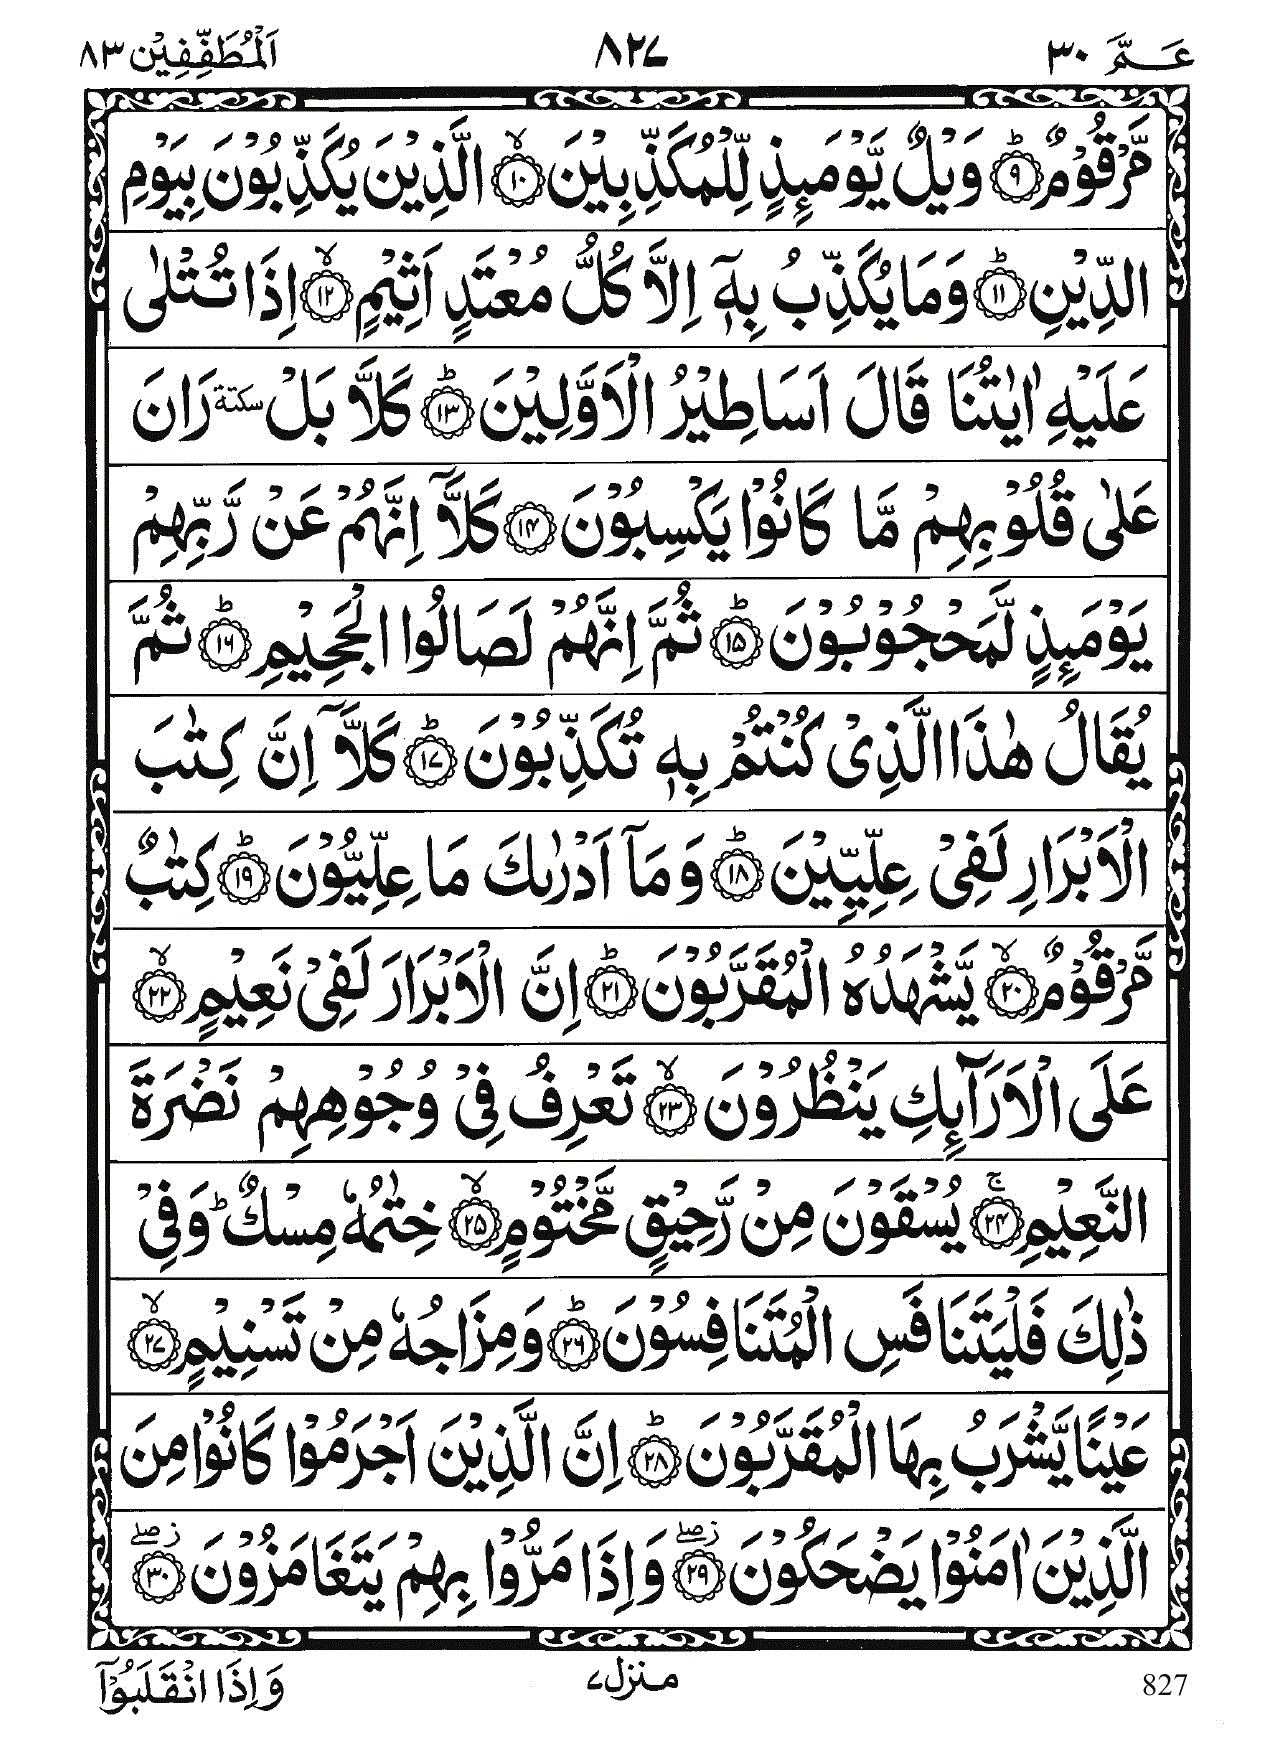 Surat al-mutaffifin menempati urutan yang ke